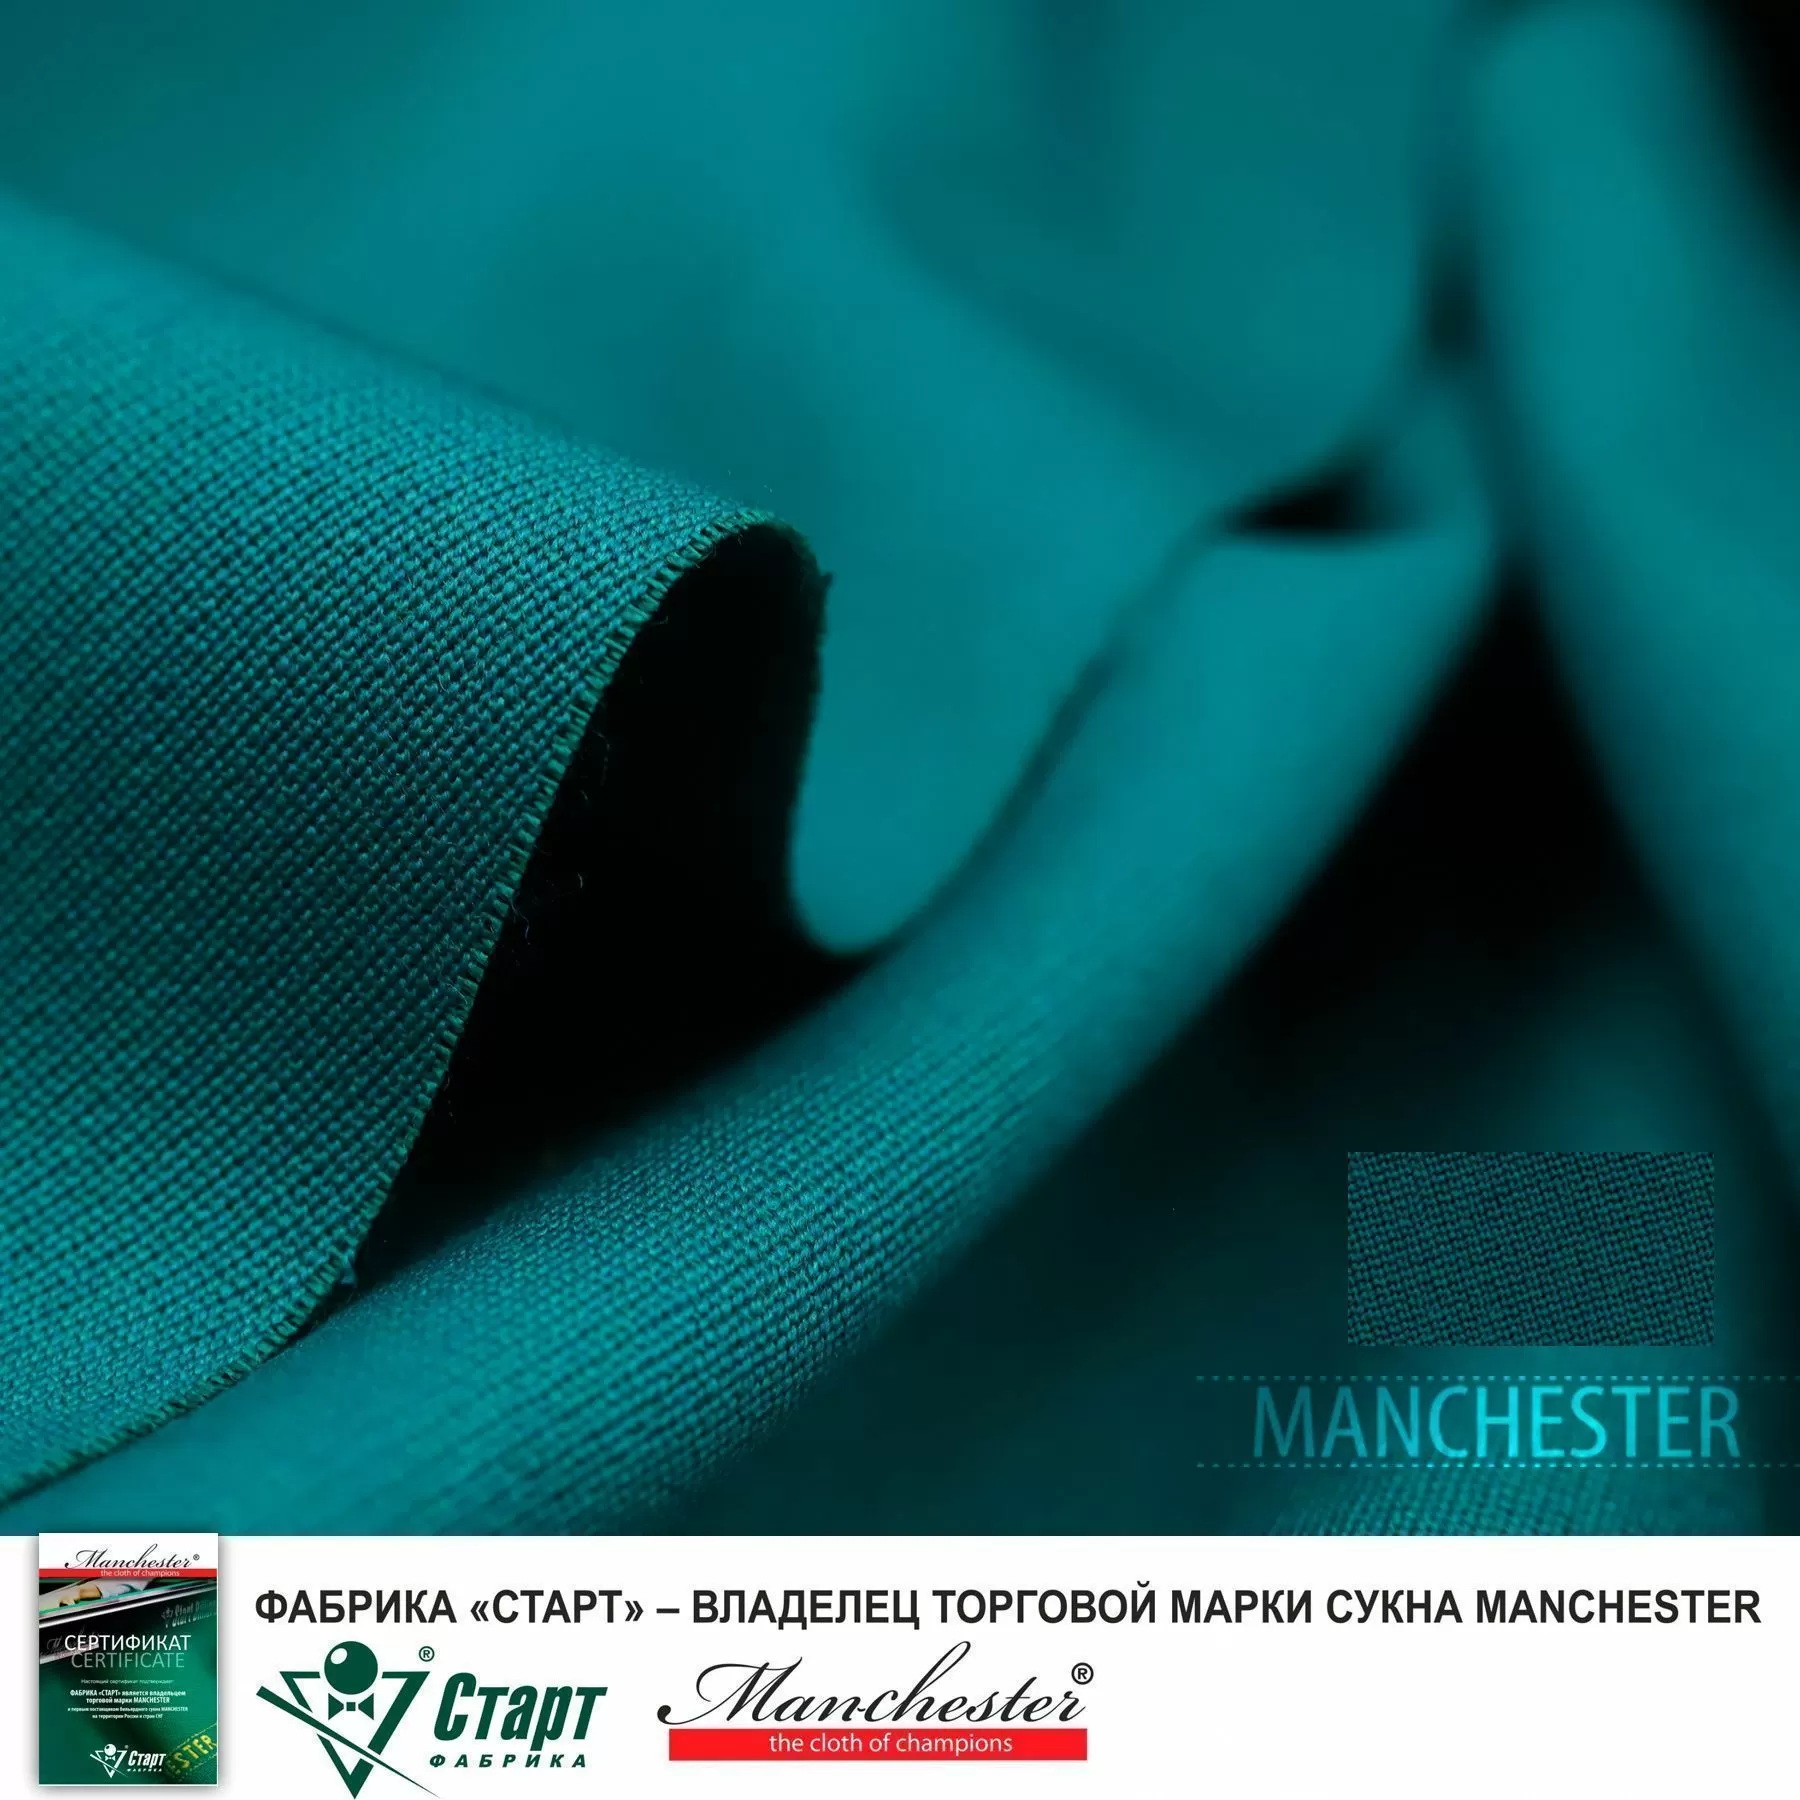 Сукно "Manchester 60 Blue green" ш1,95м